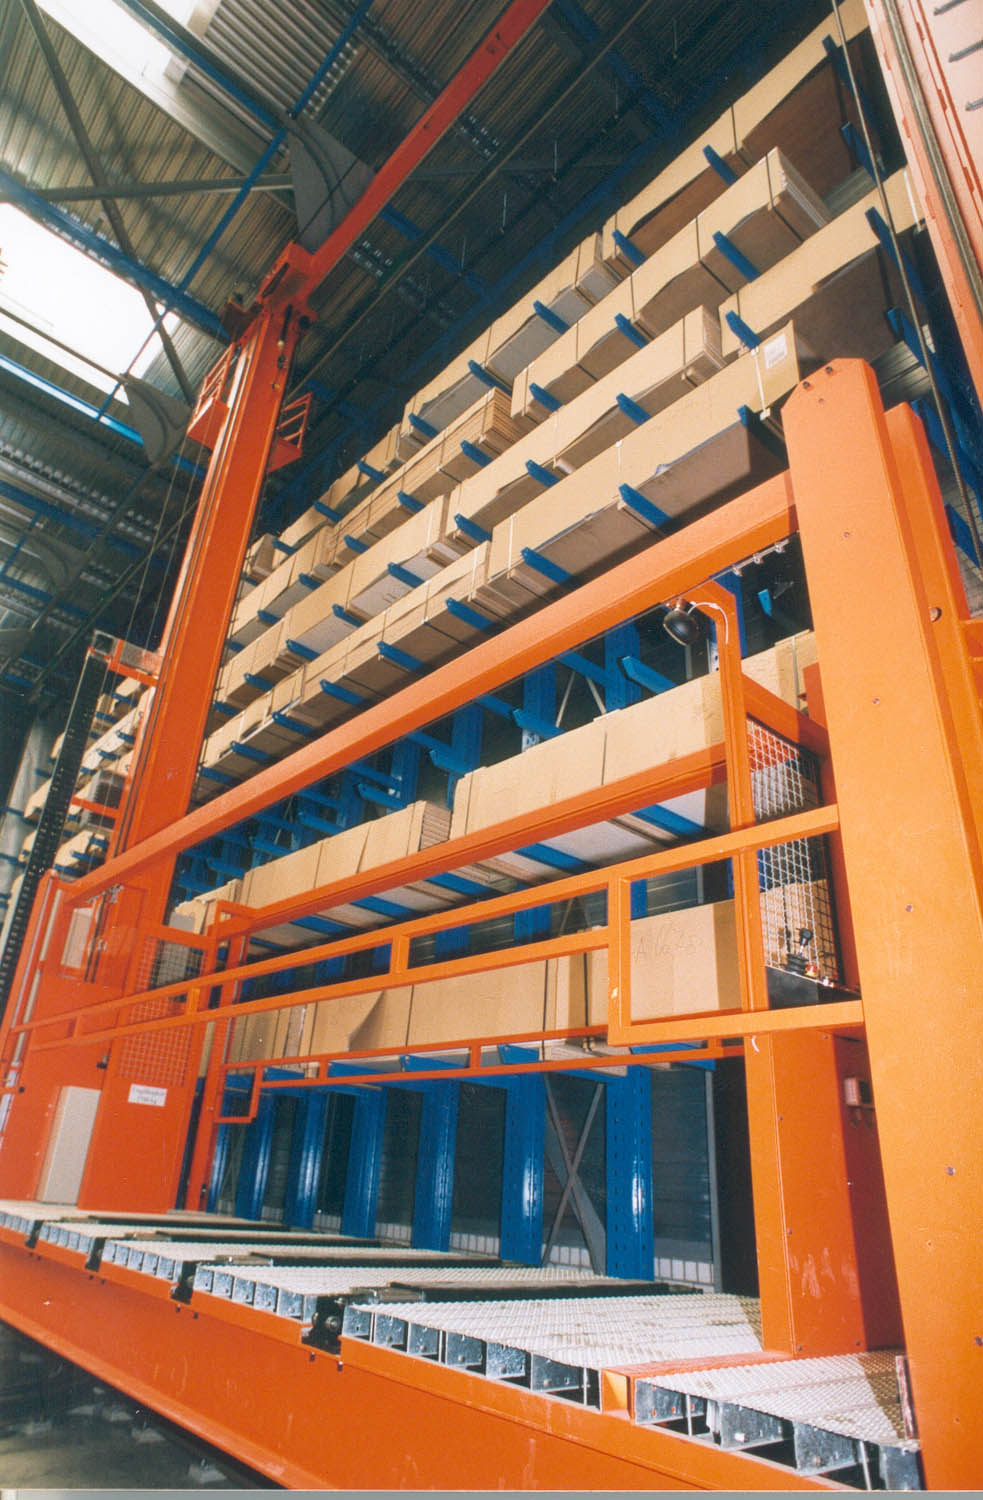 automatic warehouse, stacker crane